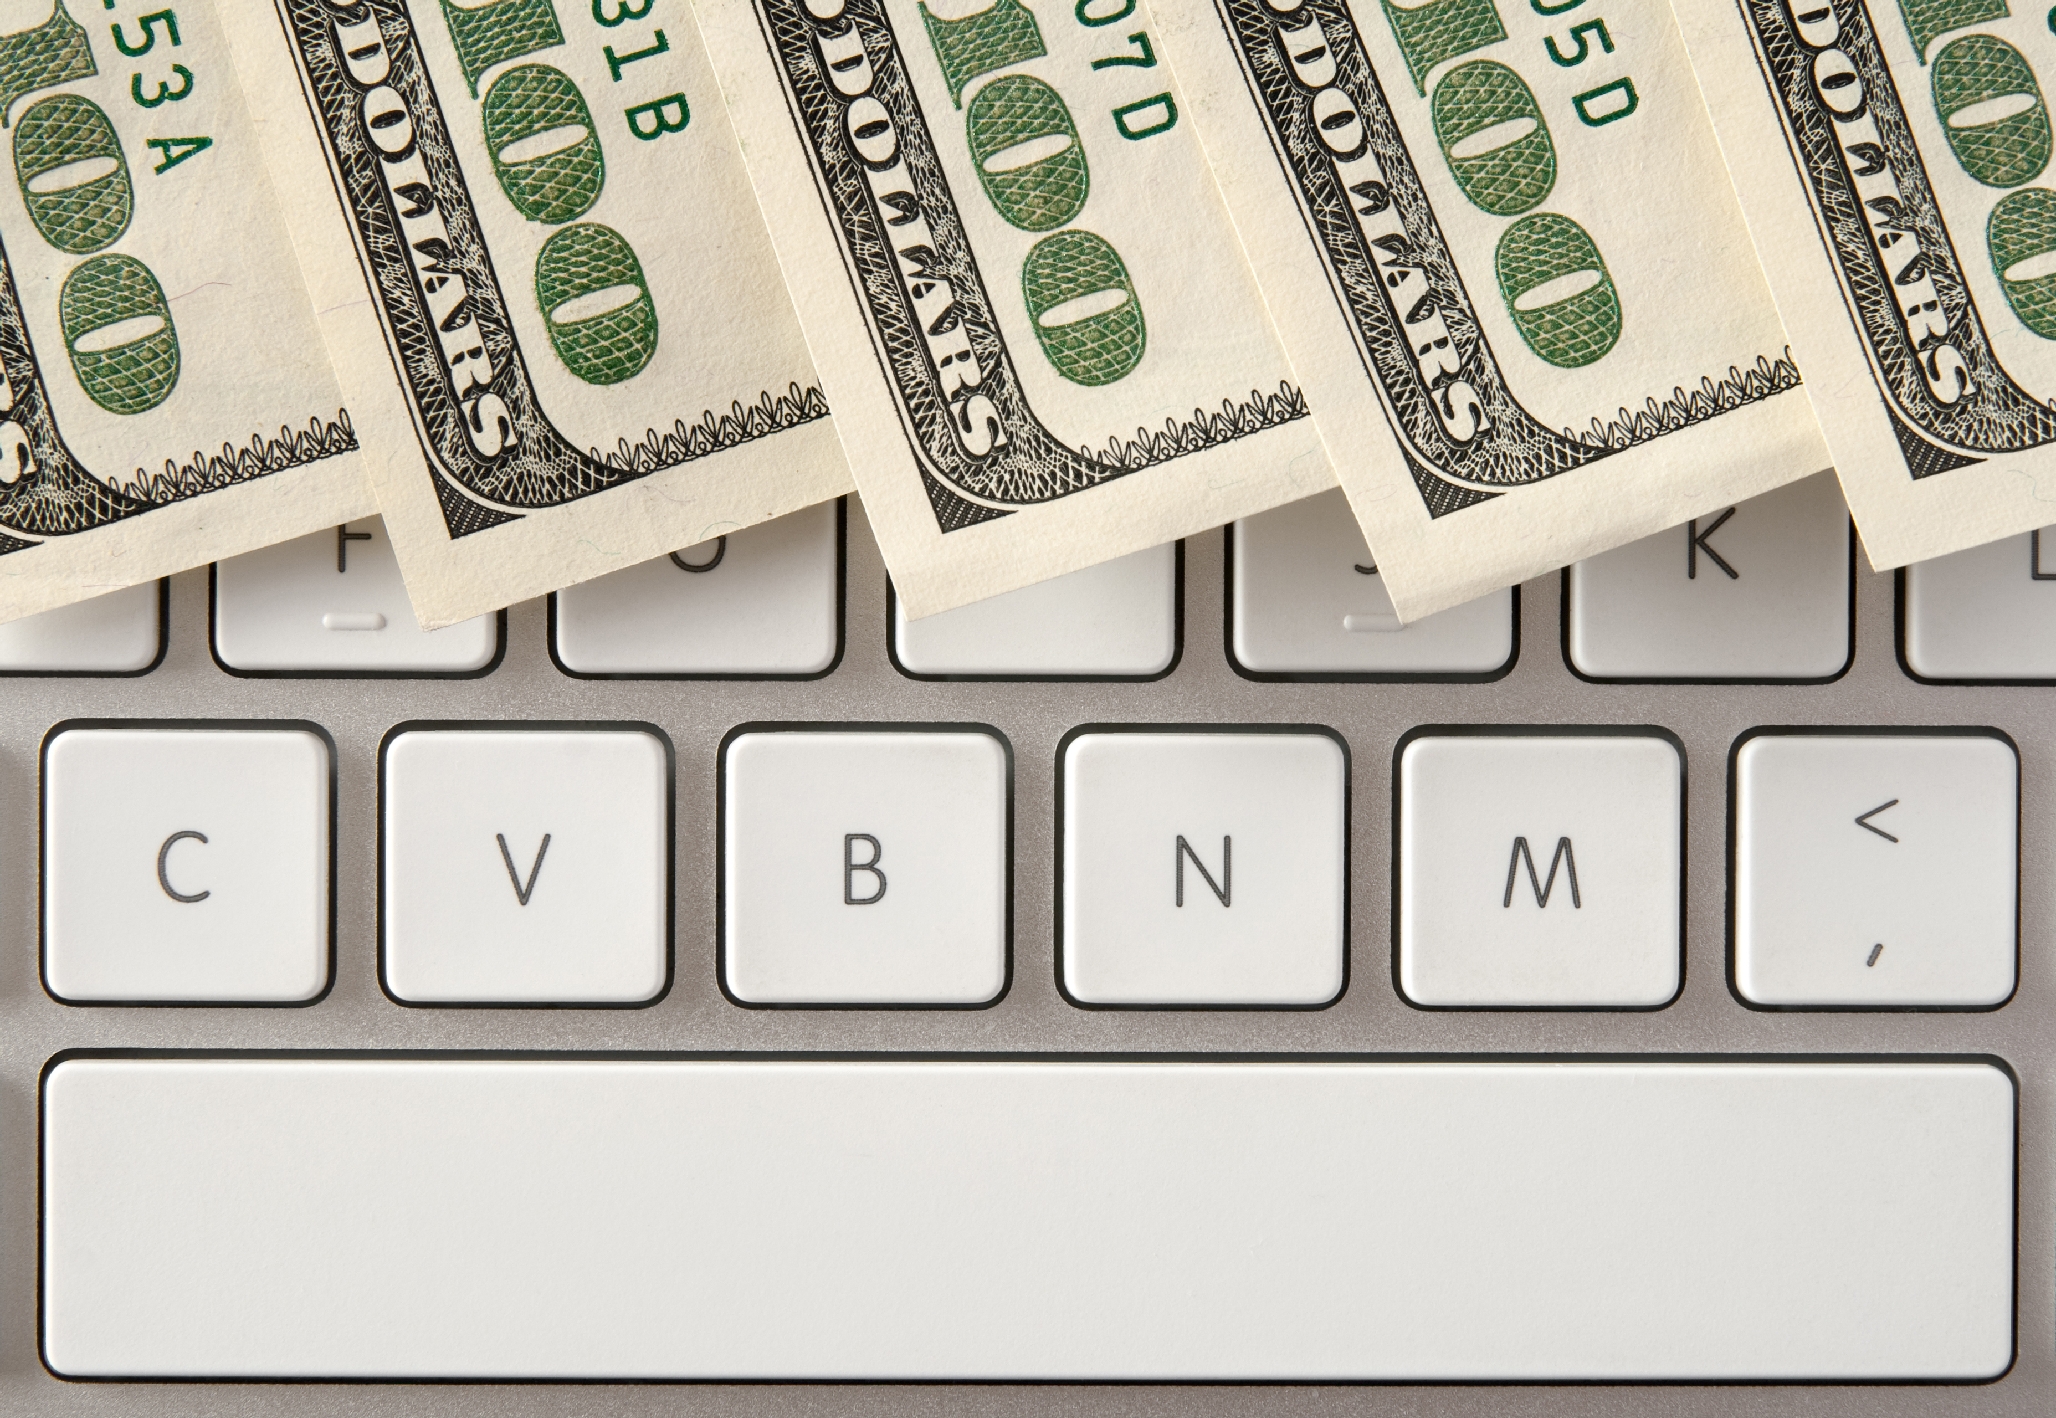 Hundred dollar bills against an Apple keyboard